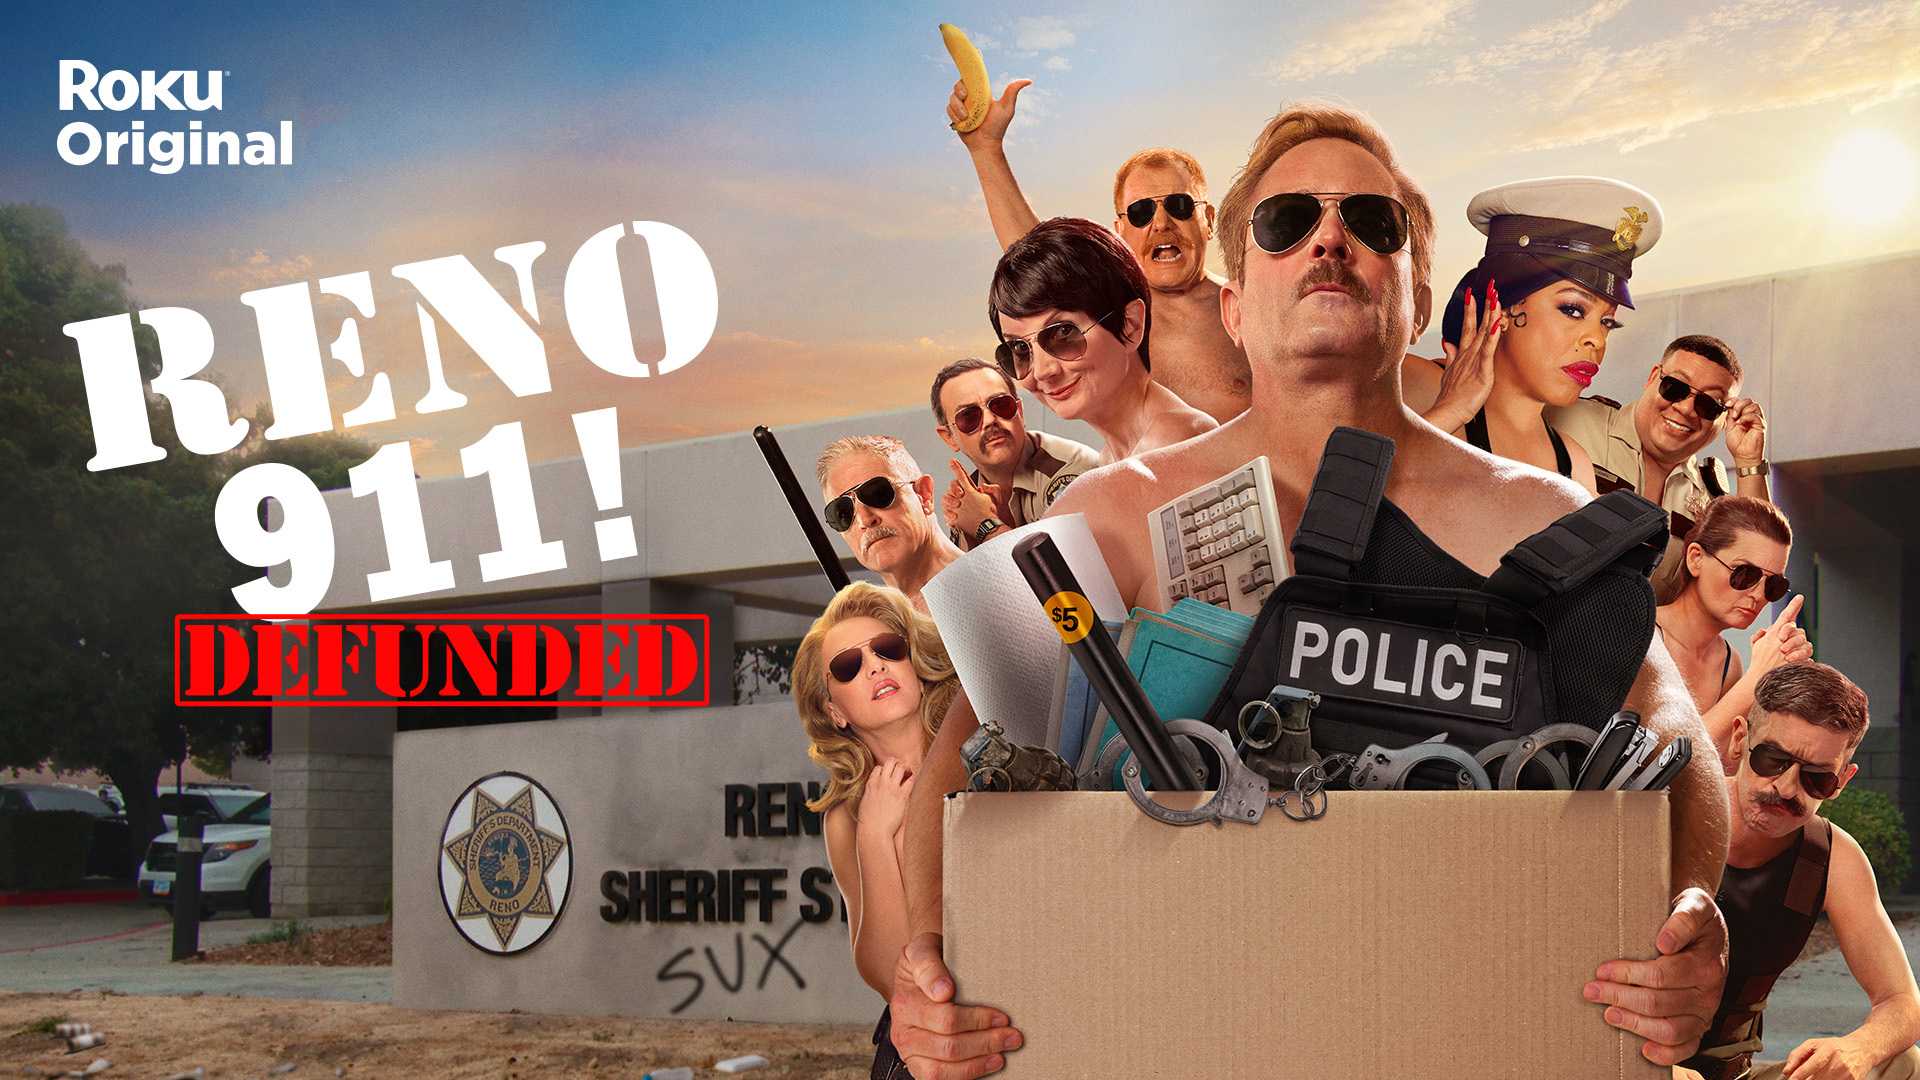 Assistir 'Reno 911!: It's a Wonderful Heist' online - ver filme completo